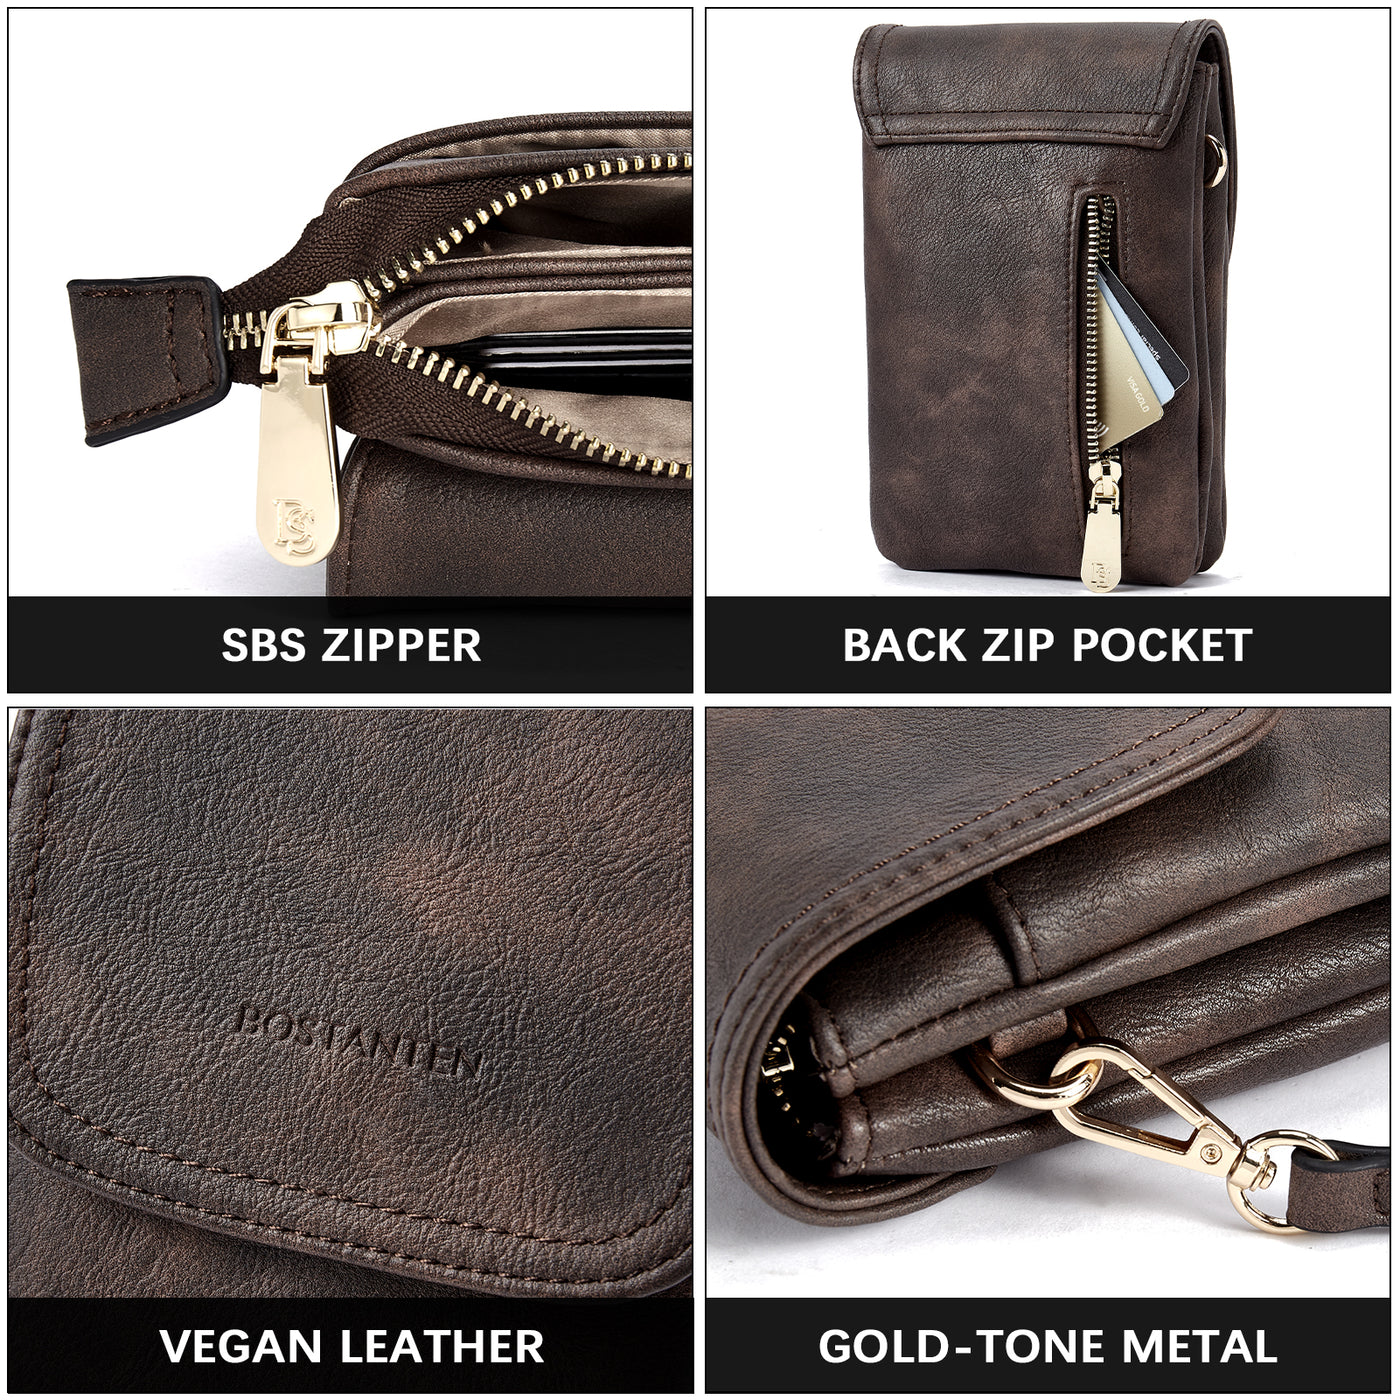 E Elton Women's Genuine Leather Small Crossbody Bags, Messenger